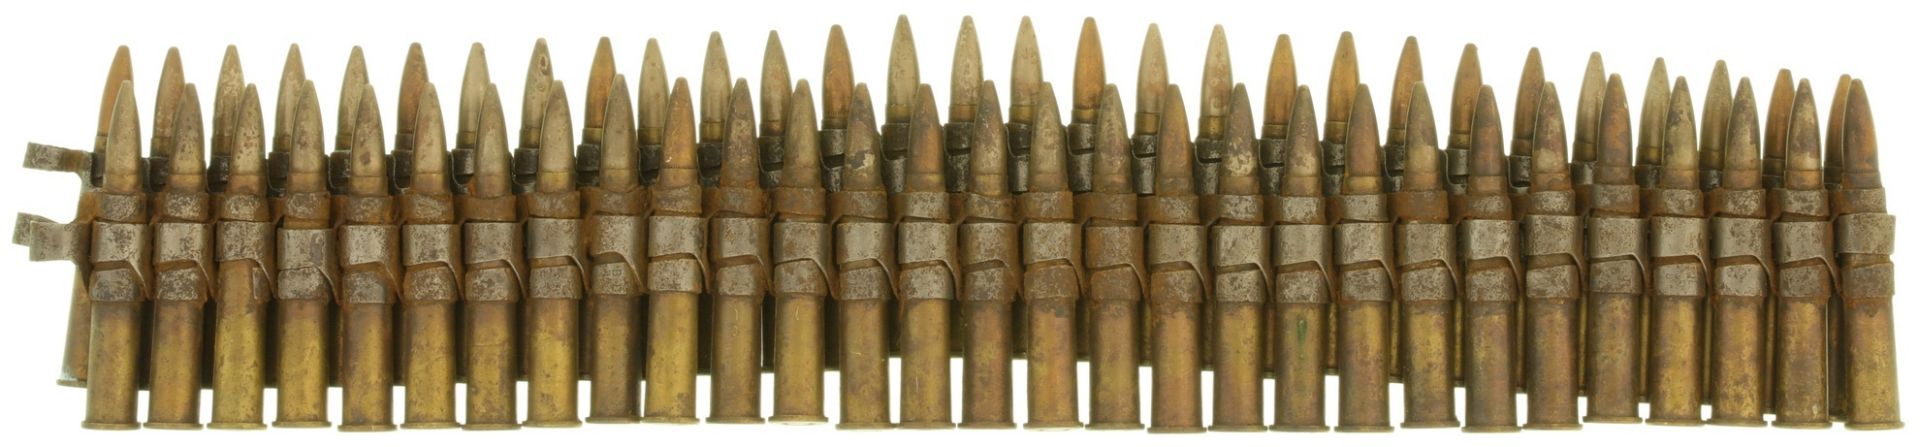 Sammlermunition, .303 british Gurt